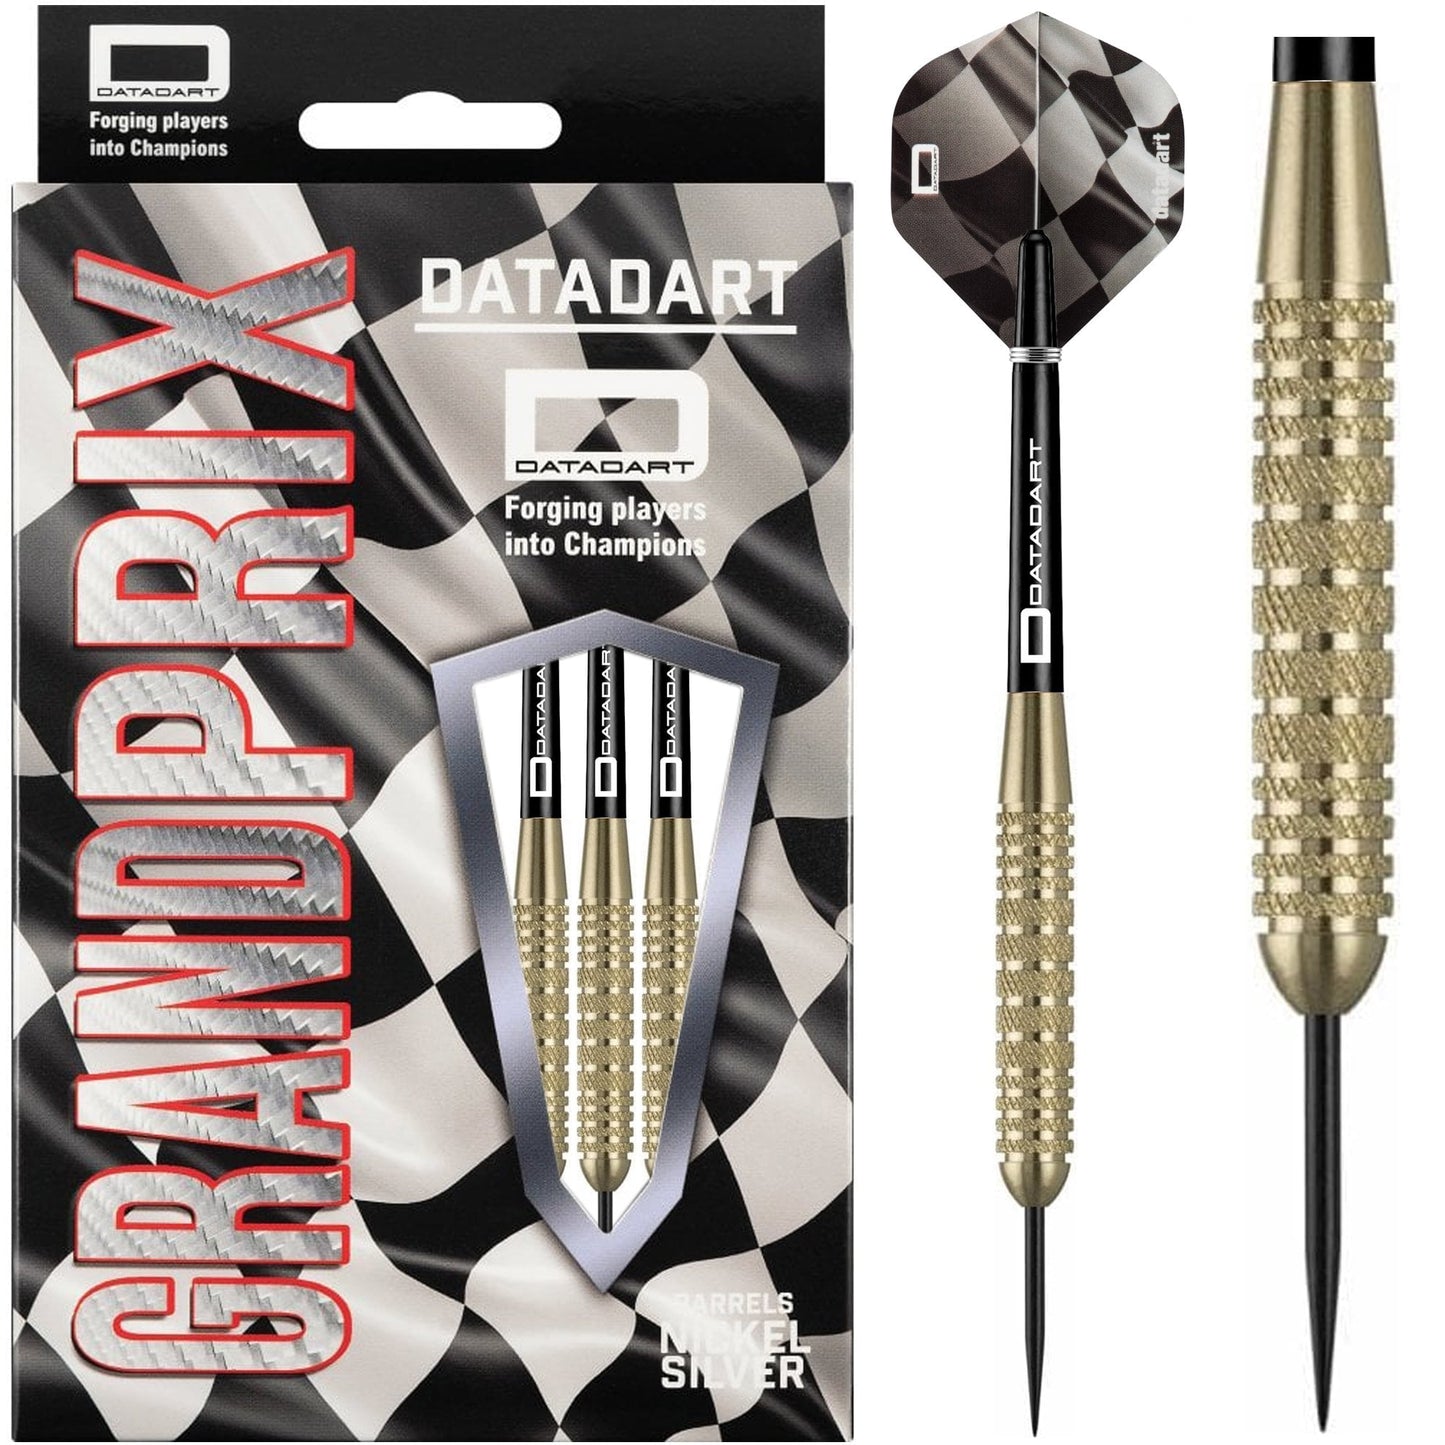 Datadart Grand Prix Darts - Steel Tip Nickel Silver - Knurled - 24g PERS